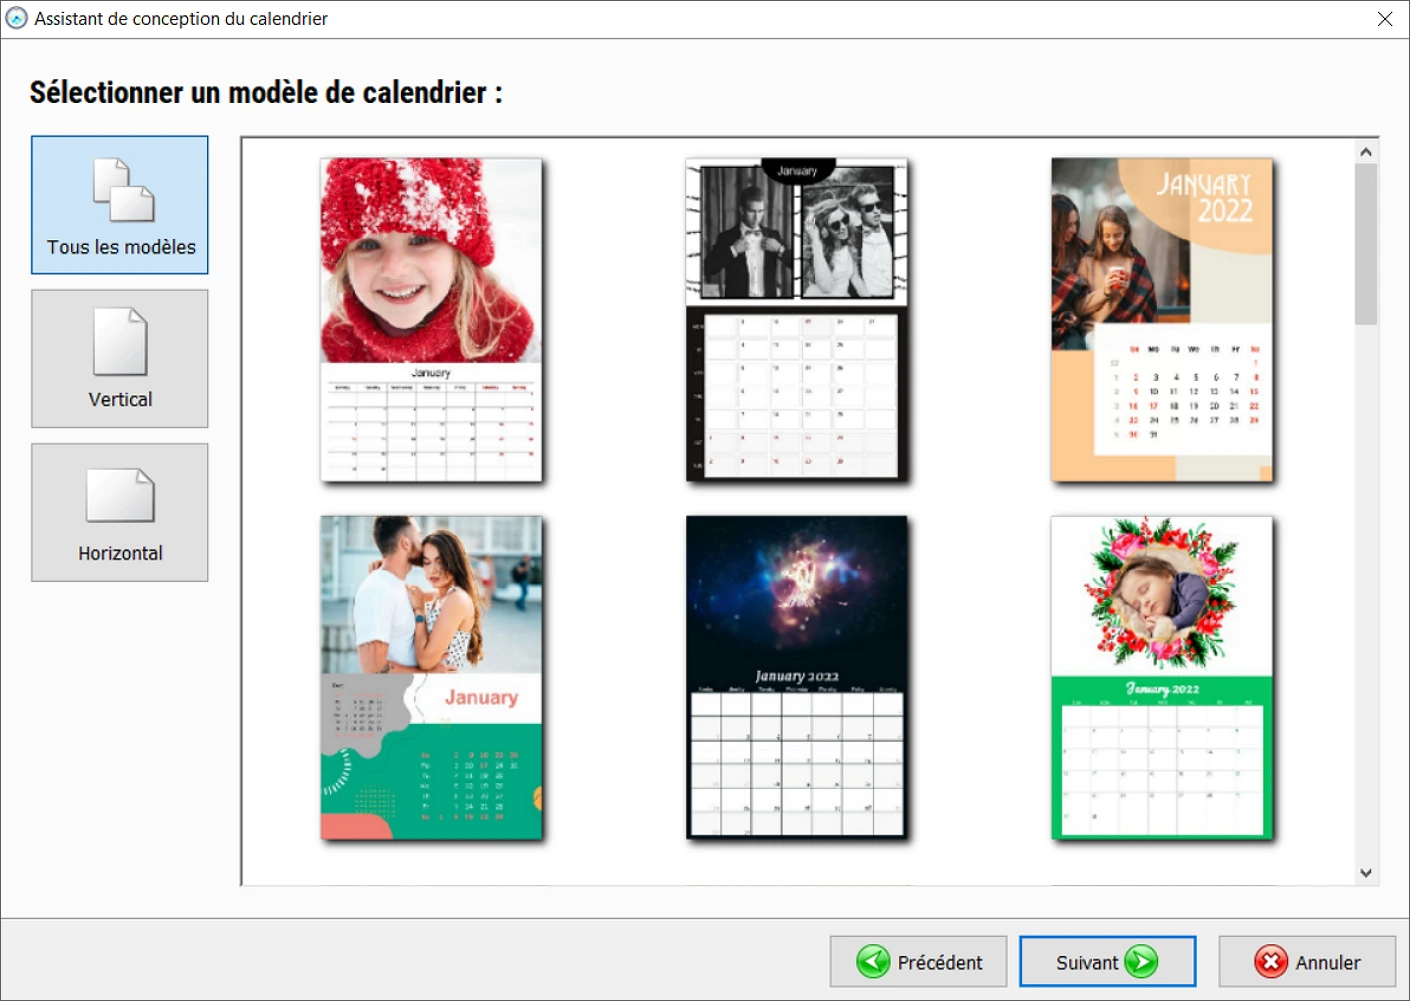 Photo Calendar Creator - logiciel convivial avec +250 modèles